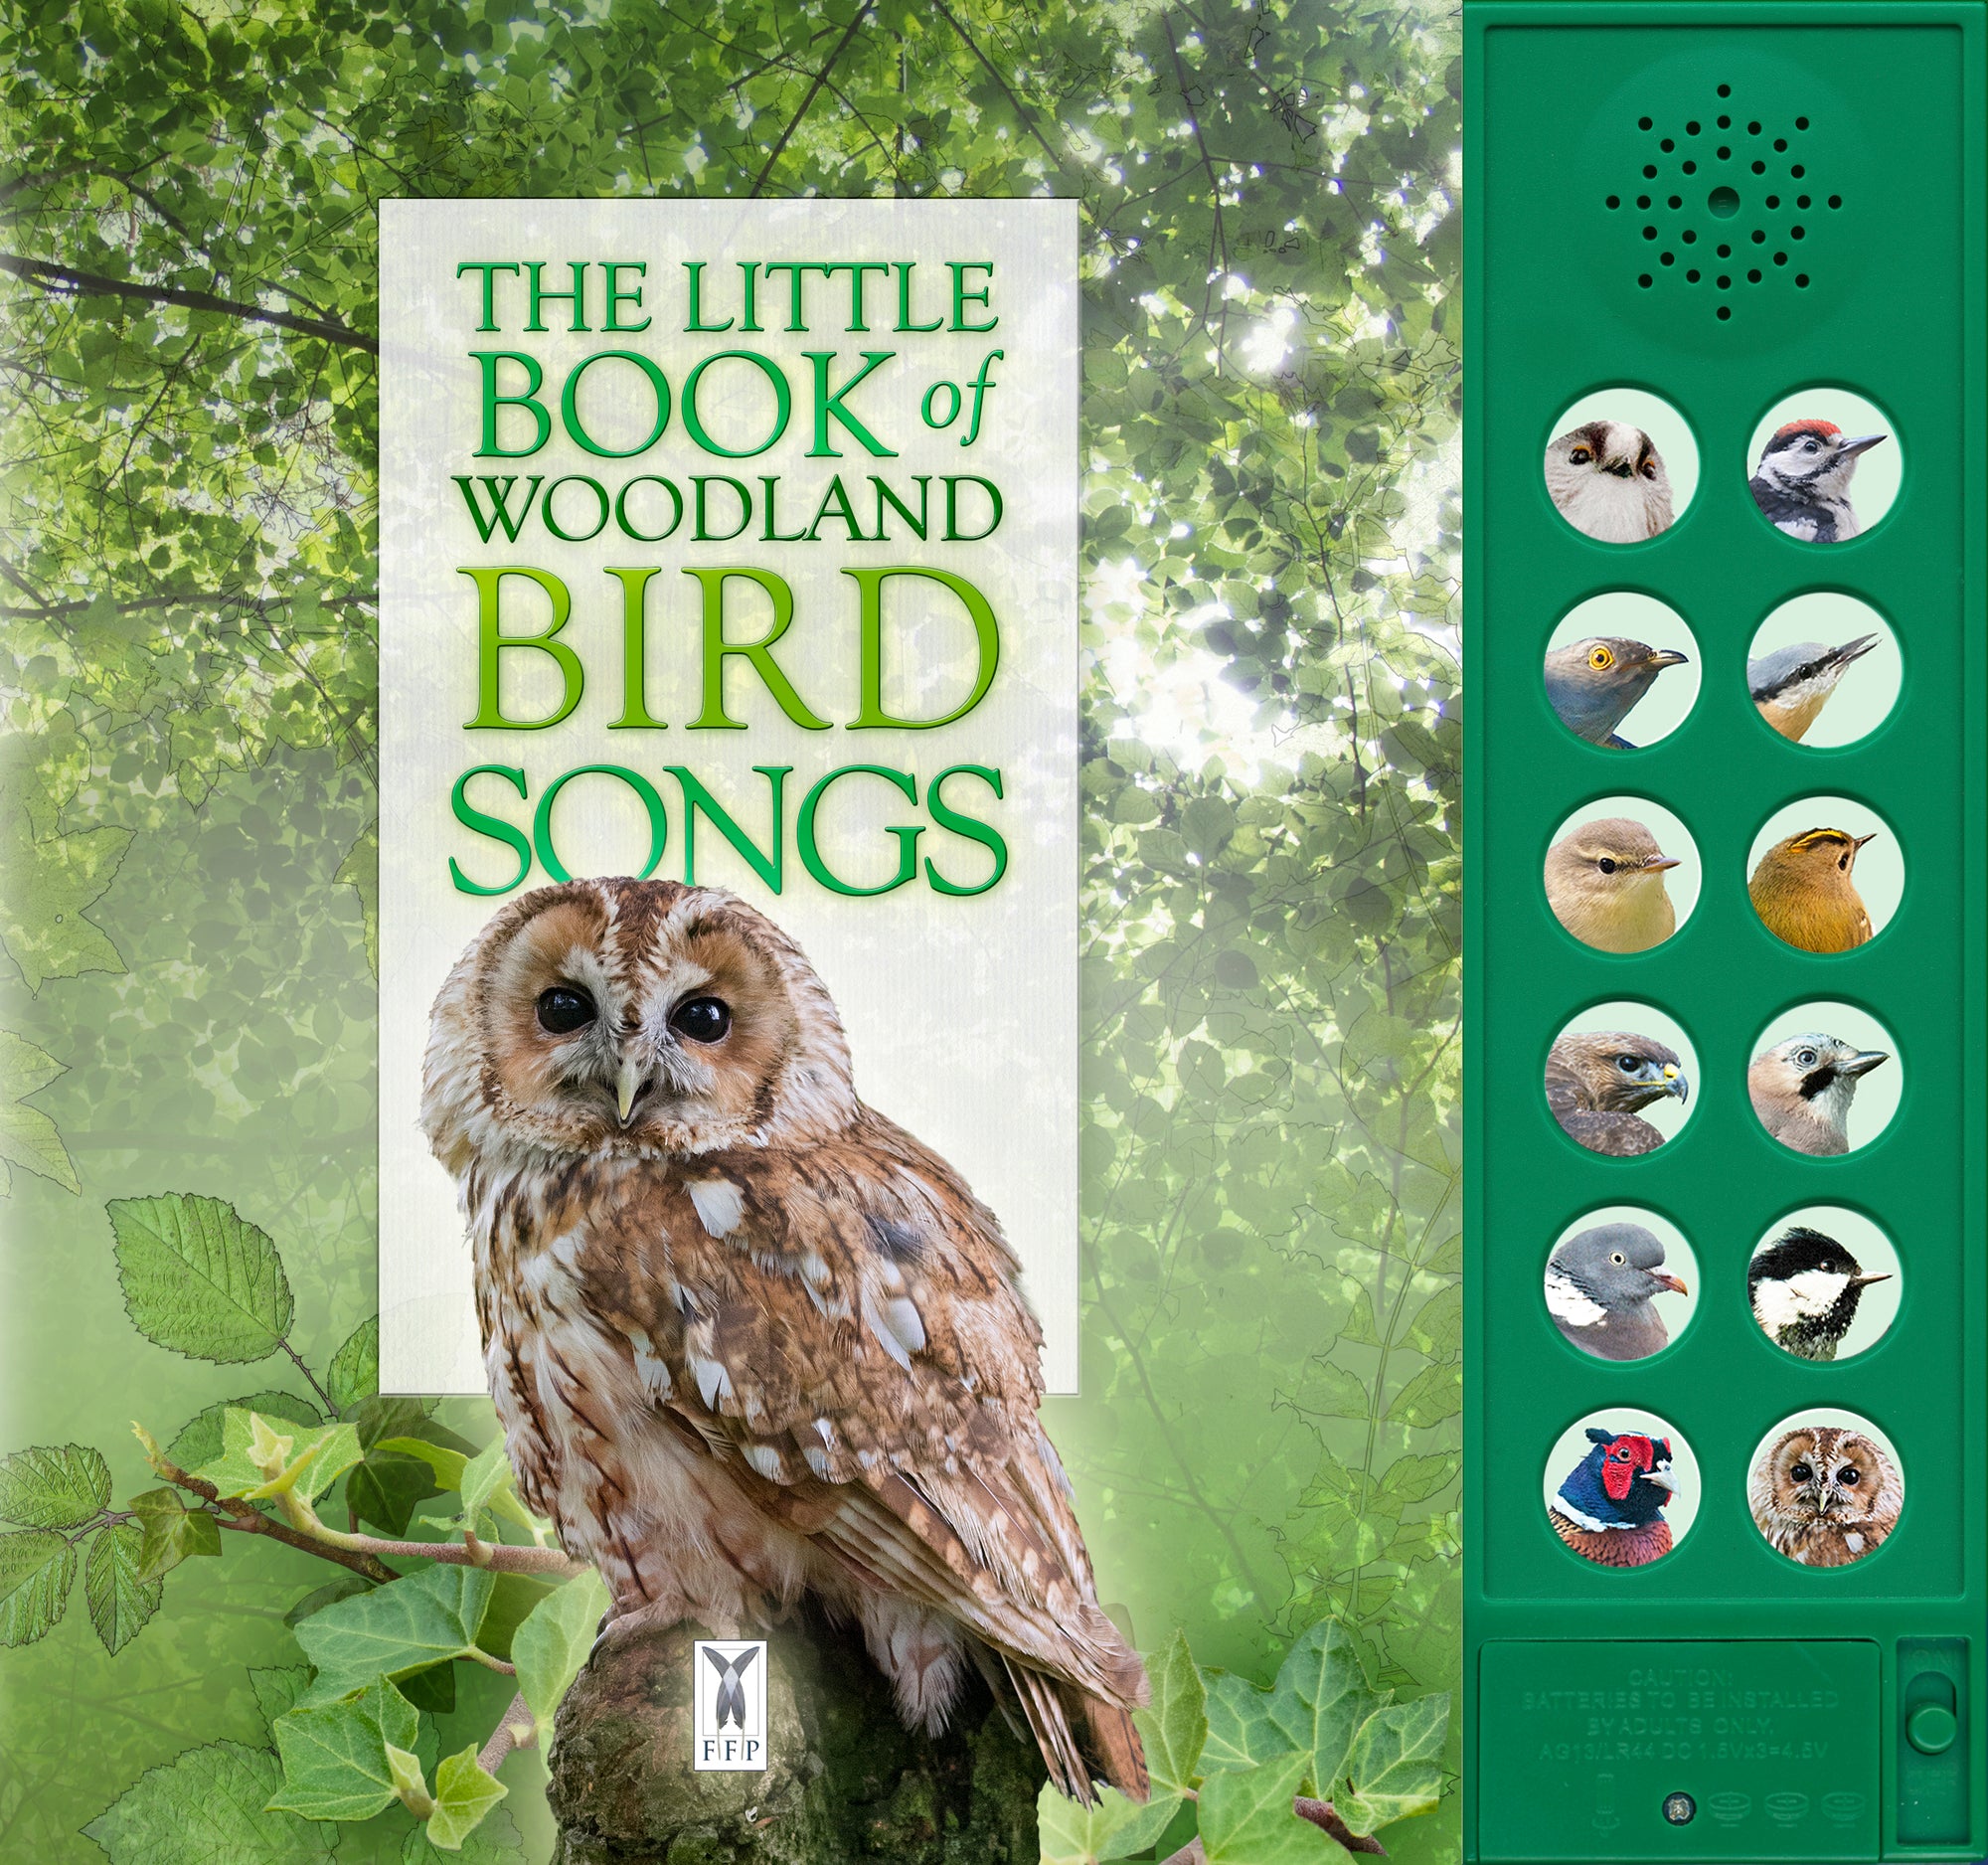 The little book of woodland bird songs